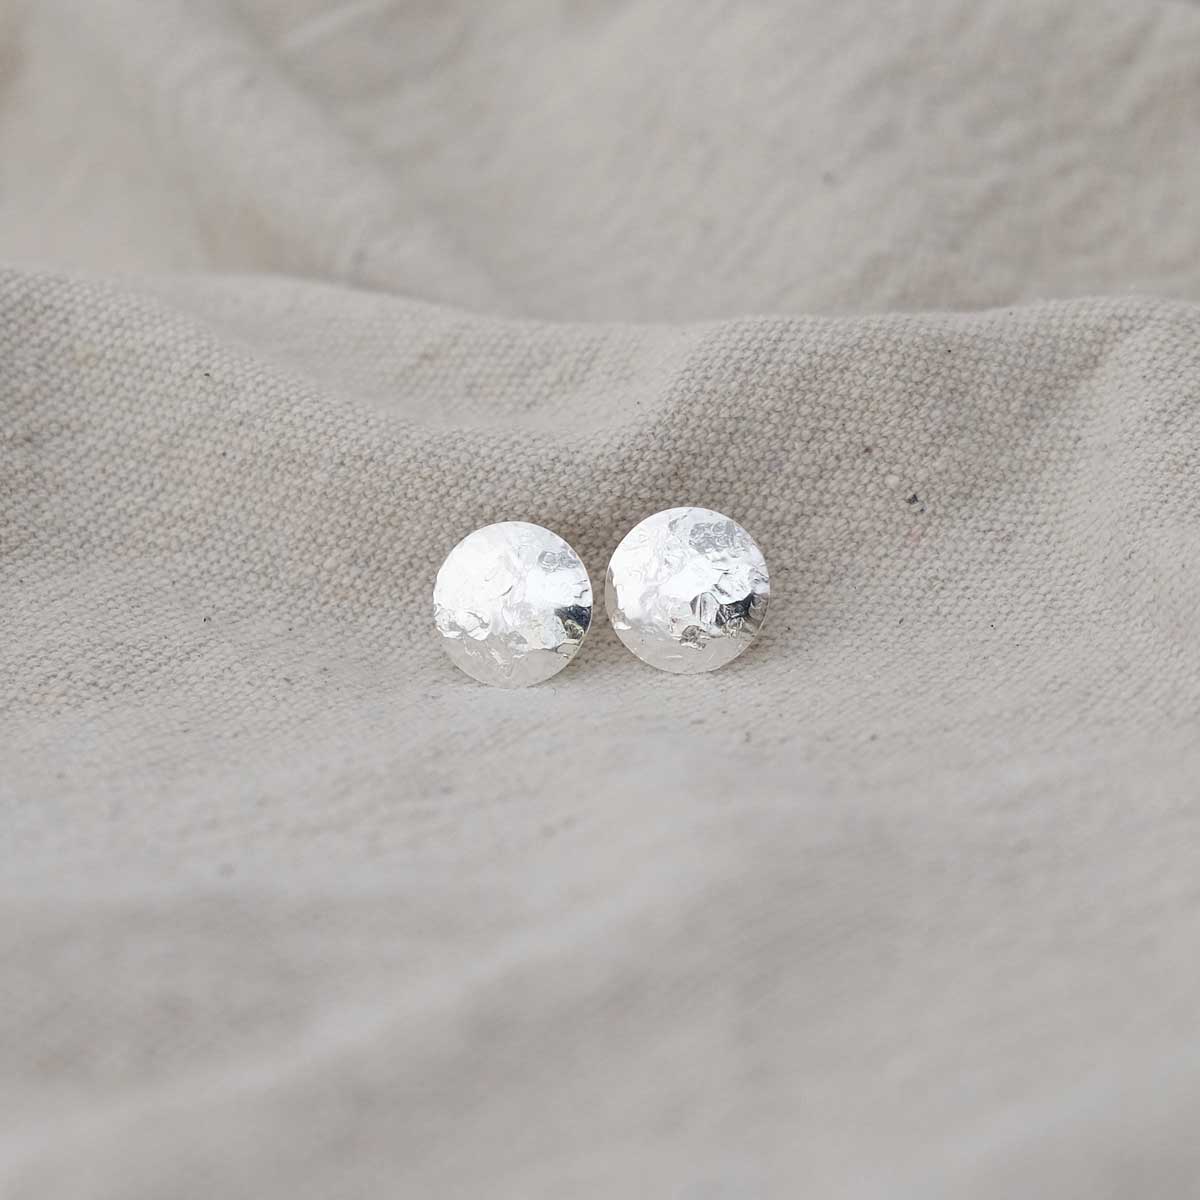 Glass Sky Jewelry - Full Moon Post Earrings - Sterling Silver Handmade Minimal Jewelry